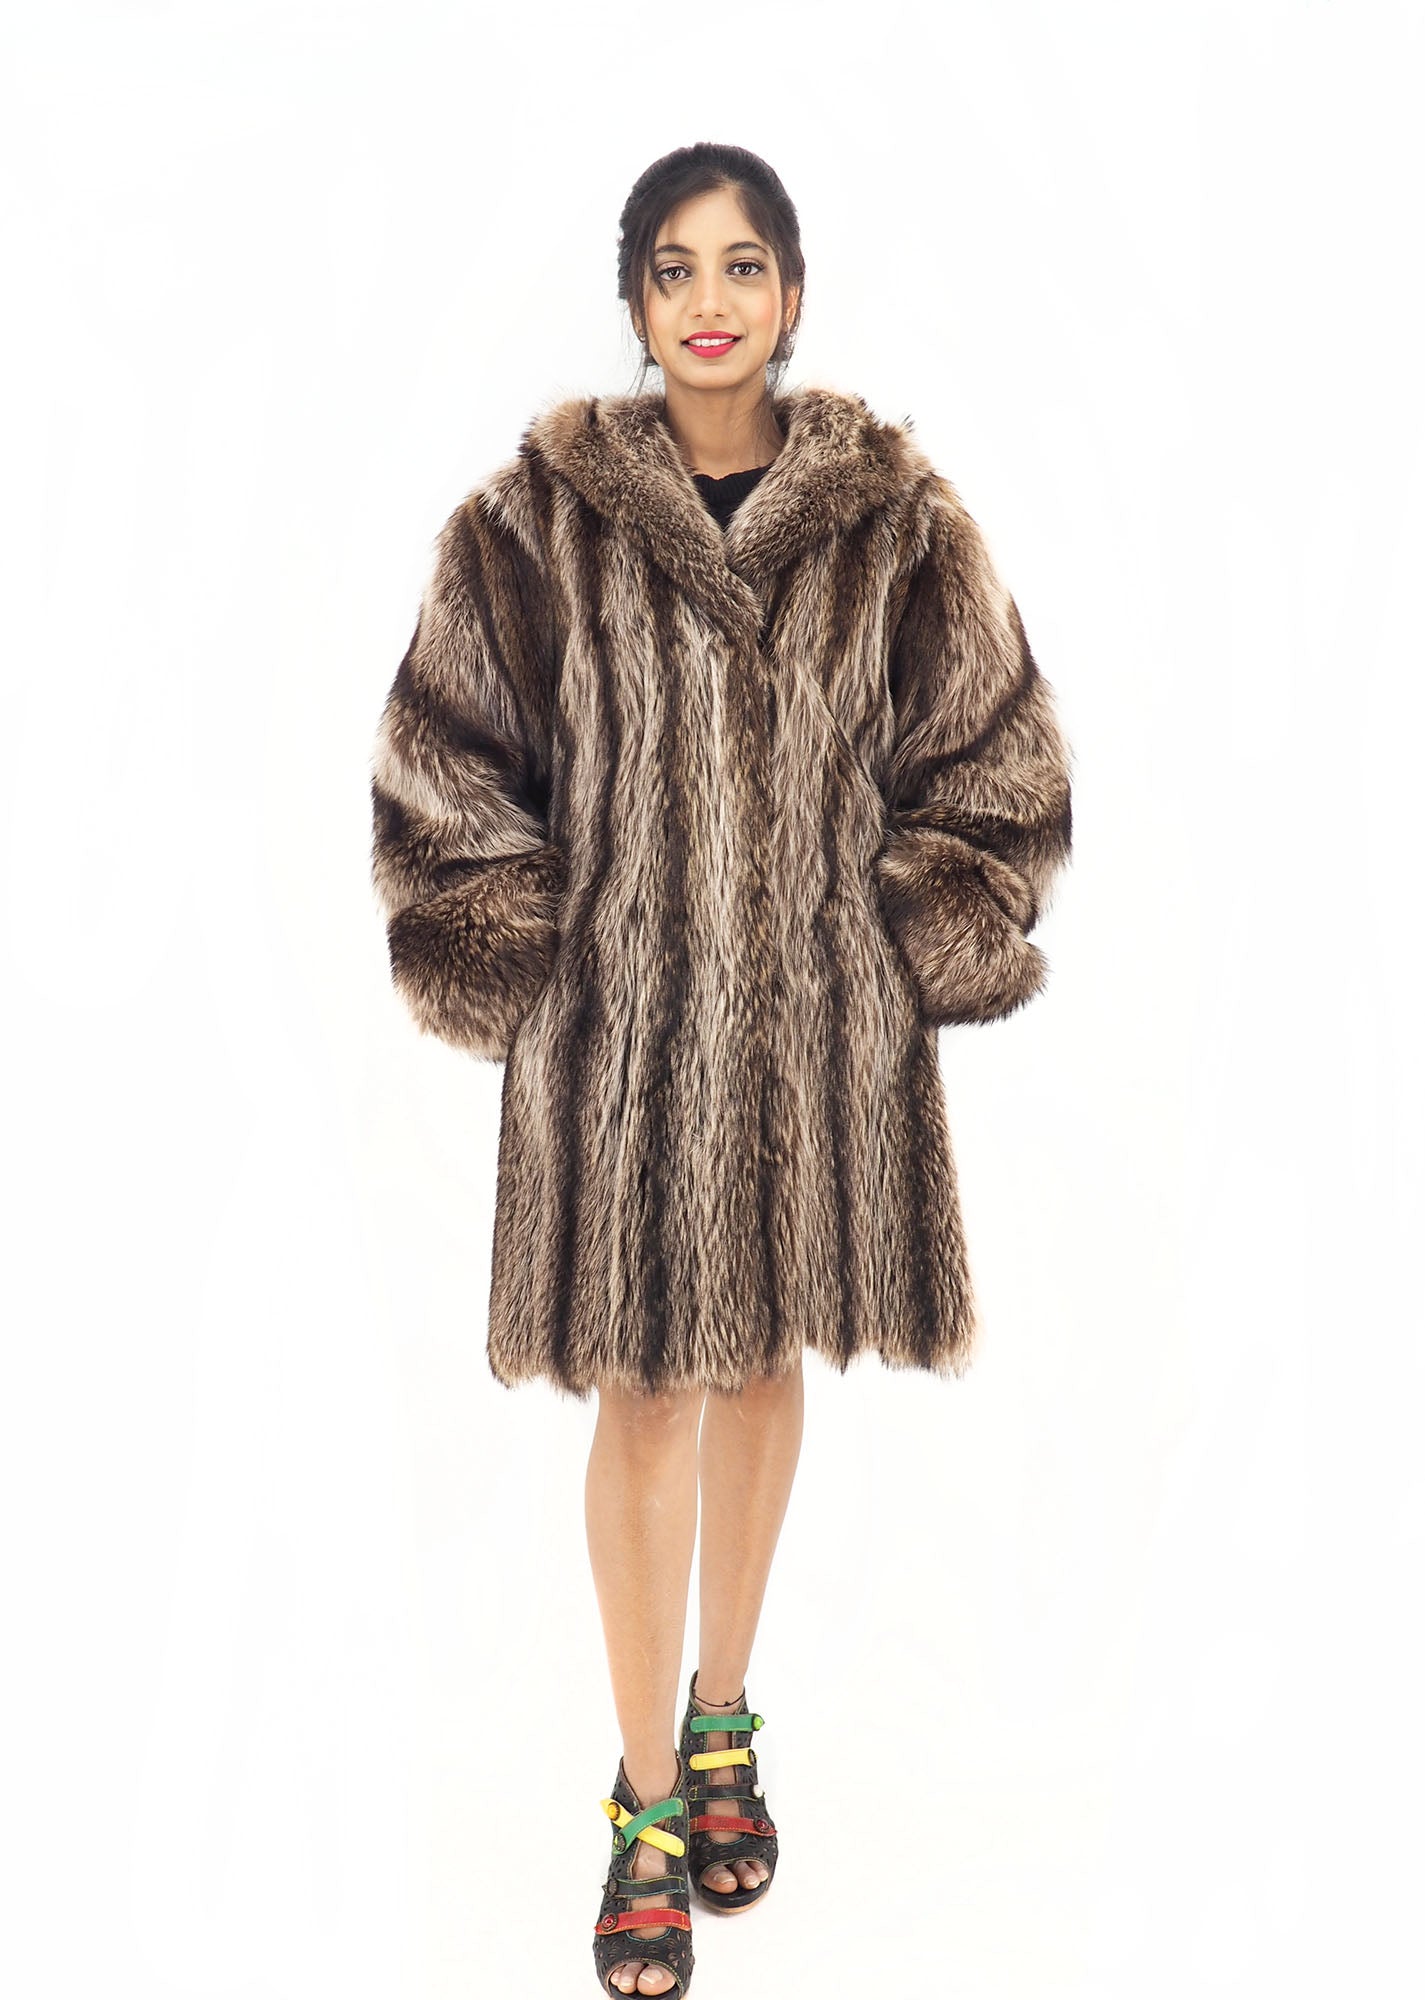 Real Raccoon Fur Trim Hood Furry Stripe for Jacket -  Canada